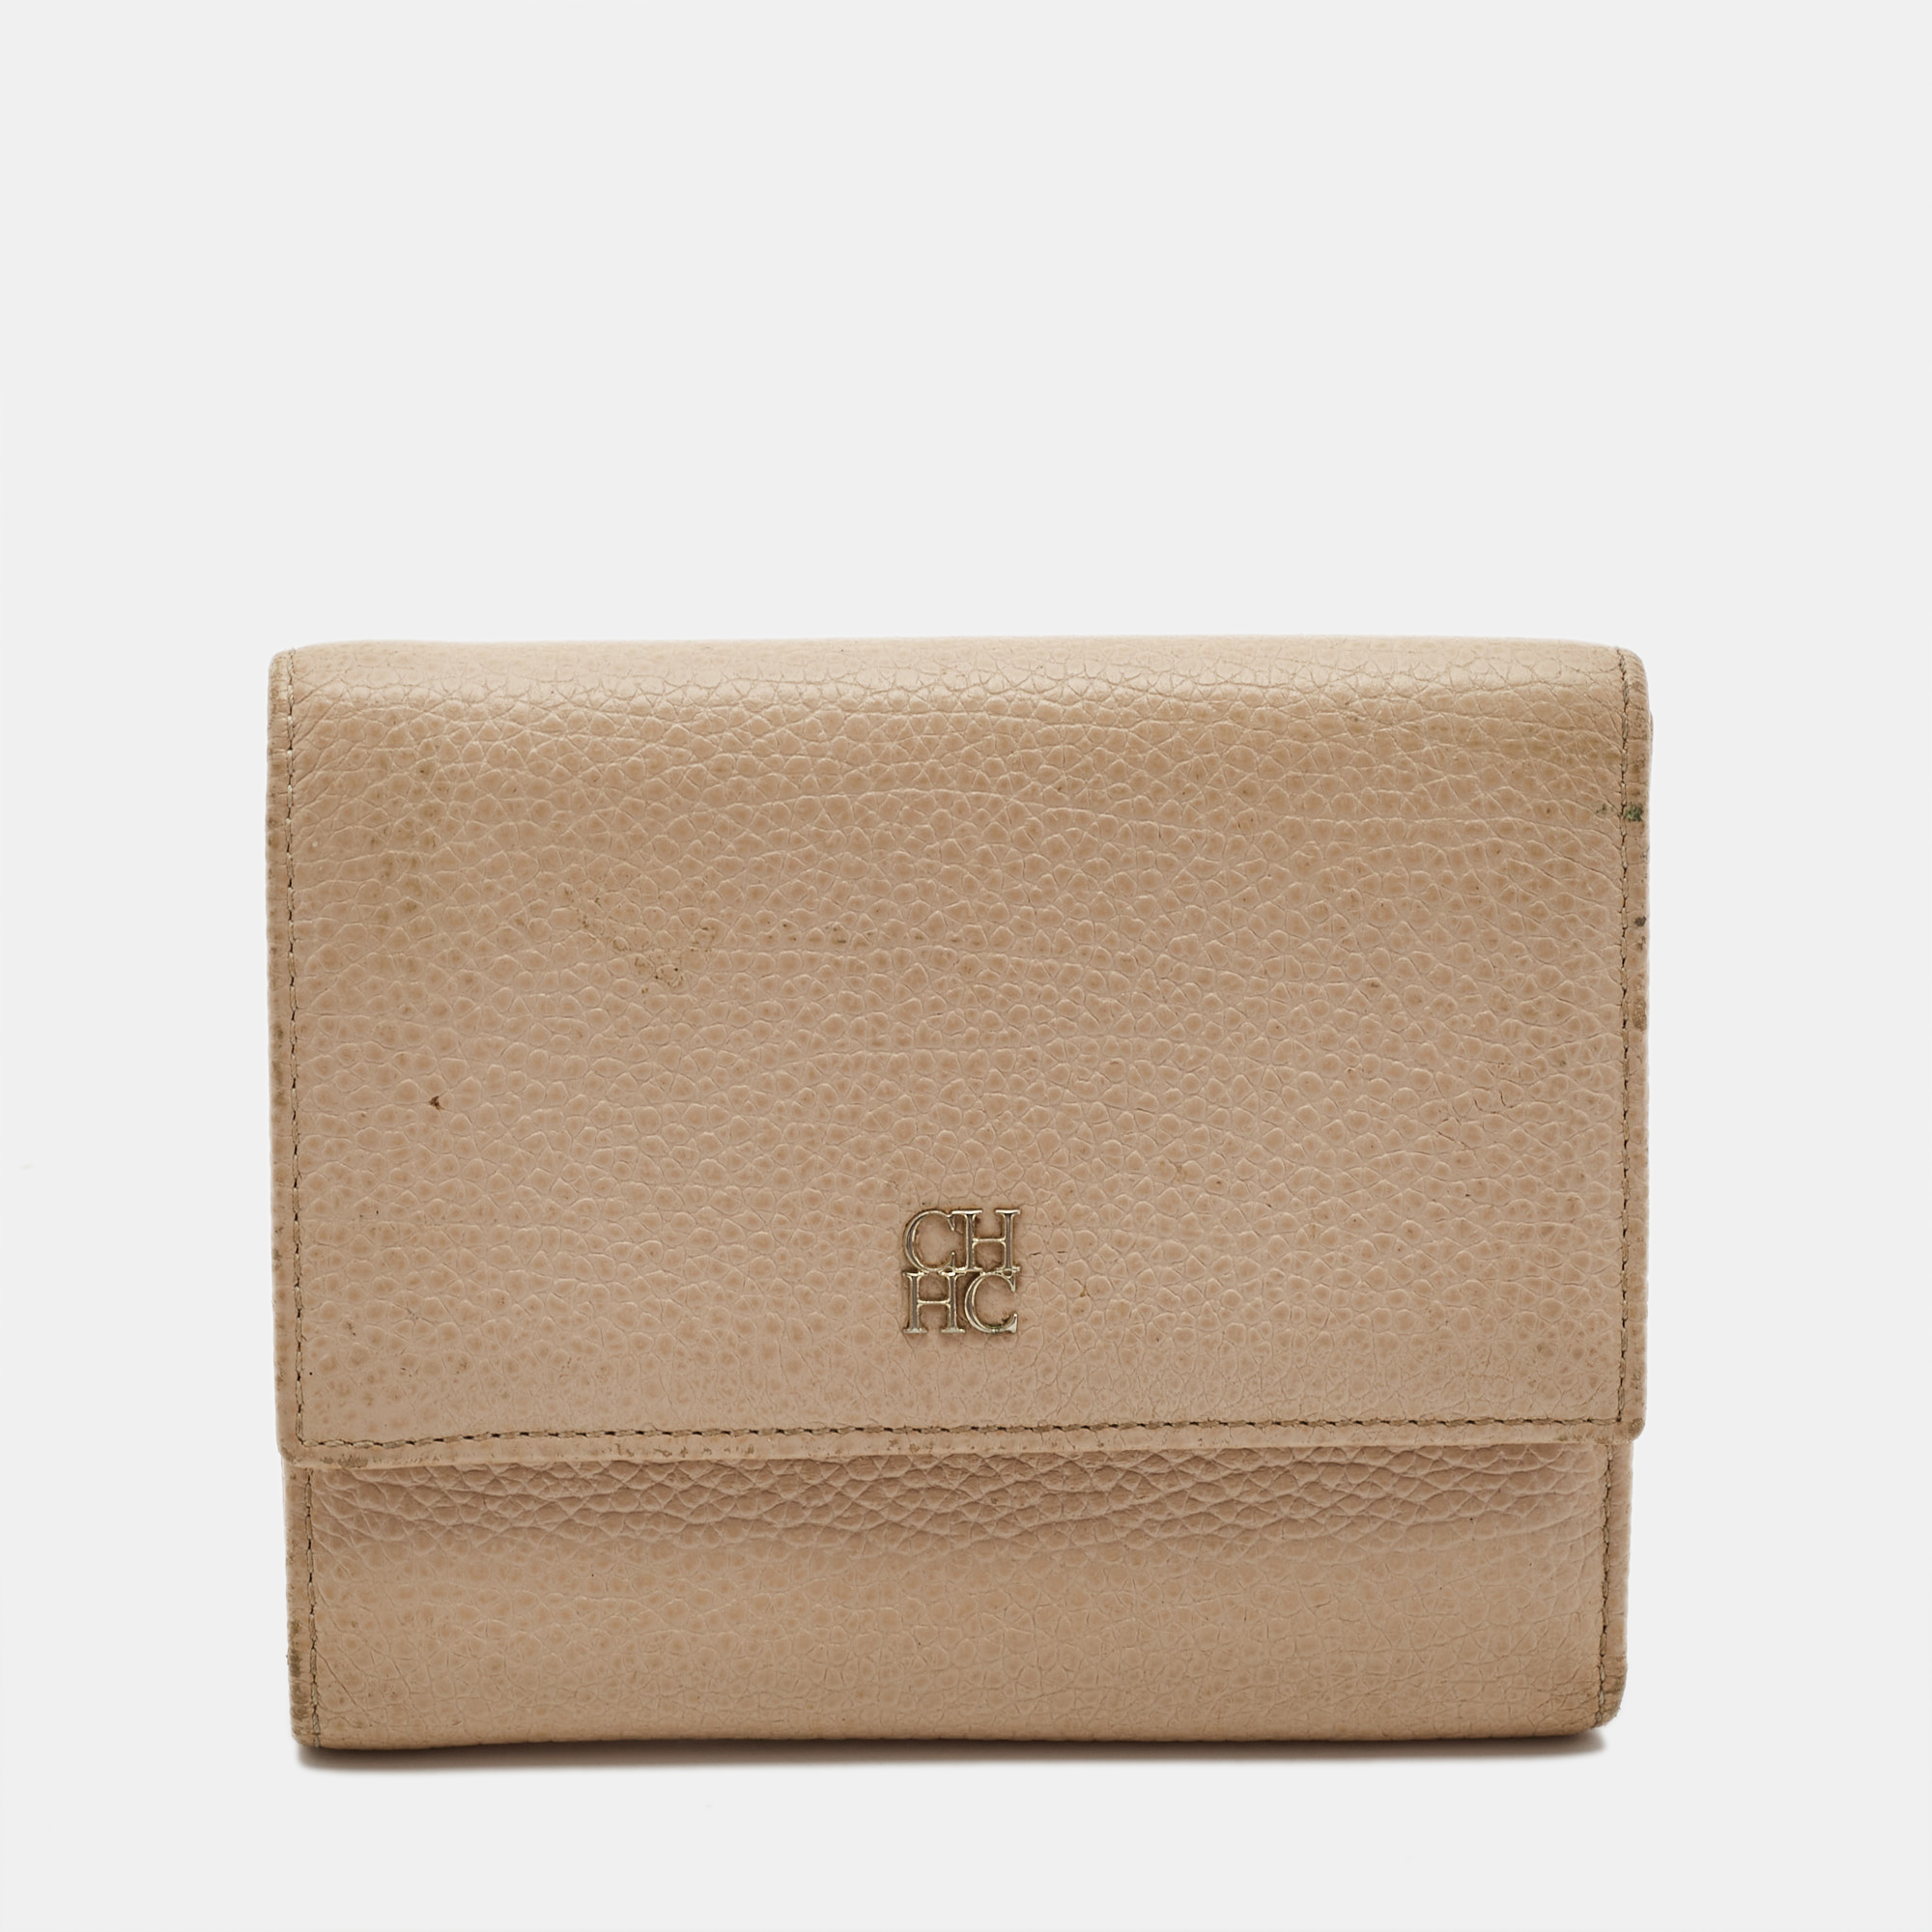 Carolina herrera peach leather logo trifold wallet